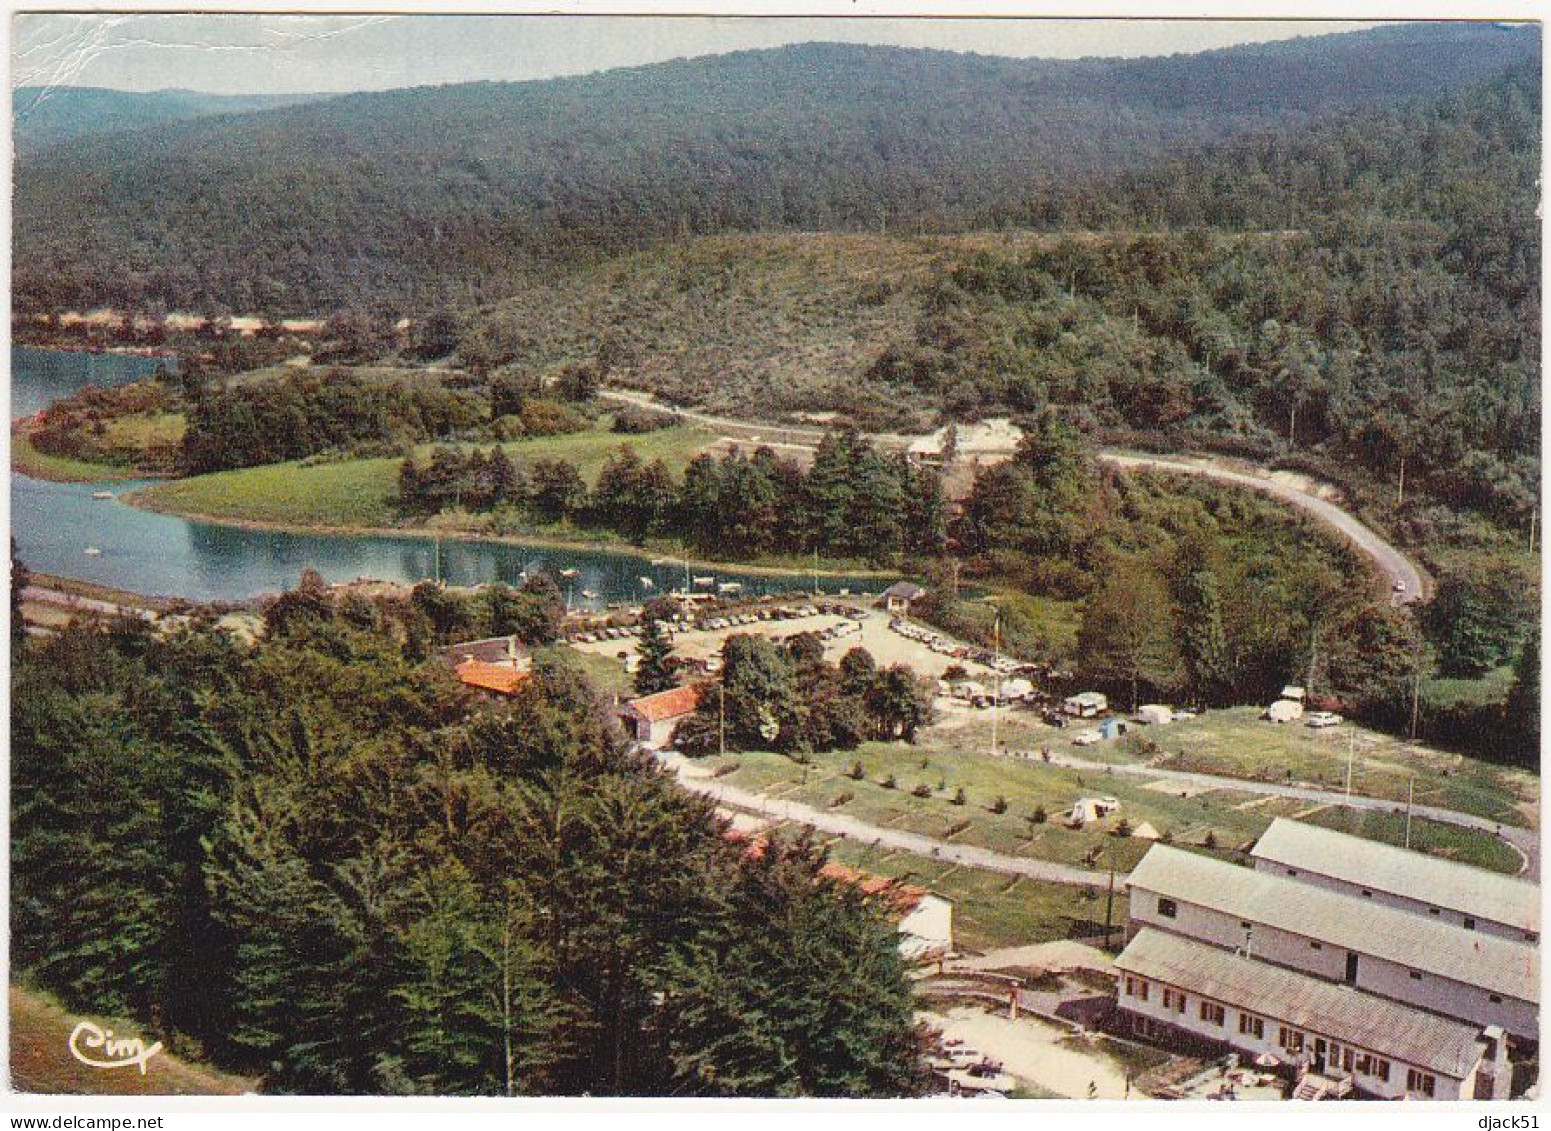 81 - ANGLES-la-RAVIEGE (Tarn) - Le Camping Ultra-moderne De L'A.C.M. Au Bord Du Lac De La Raviège - 1962 - Angles